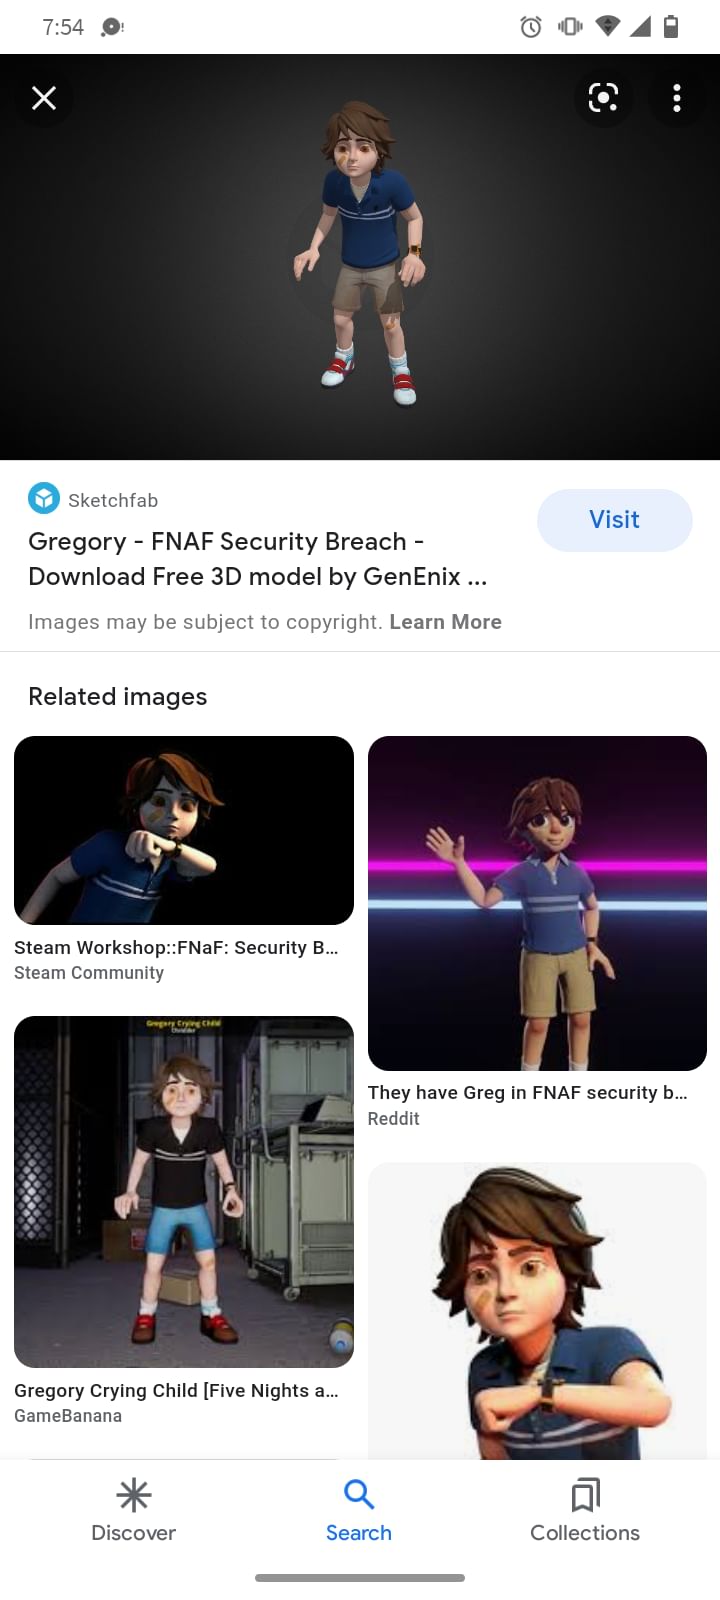 Gregory - FNAF Security Breach - Download Free 3D model by GenEnix